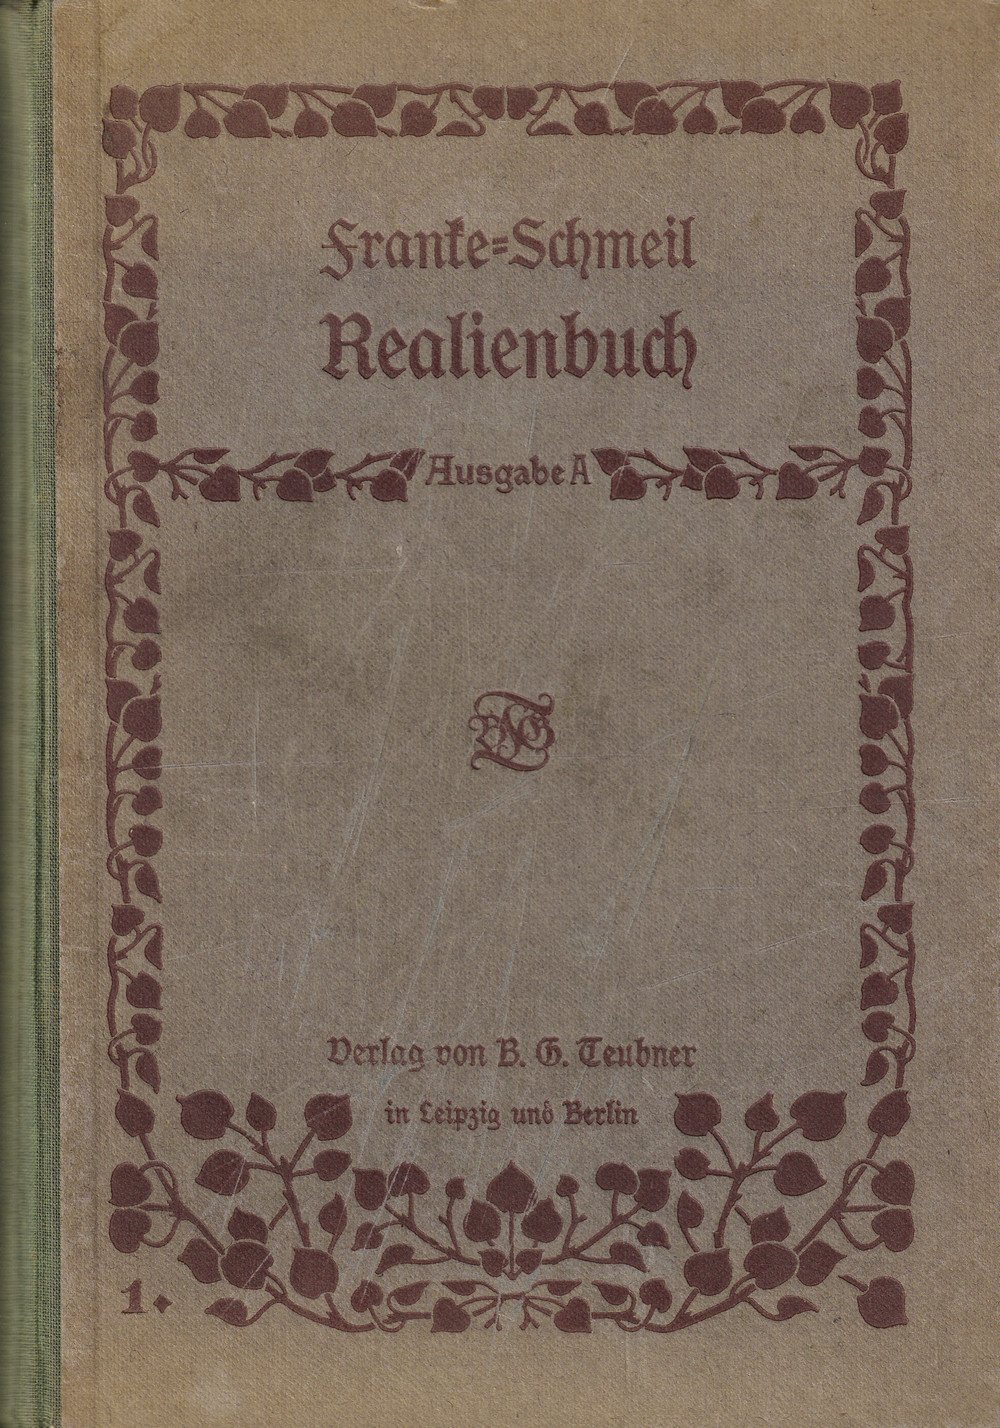 Franke-Schmeil: Realienbuch (Kulturverein Guntersblum CC BY-NC-SA)